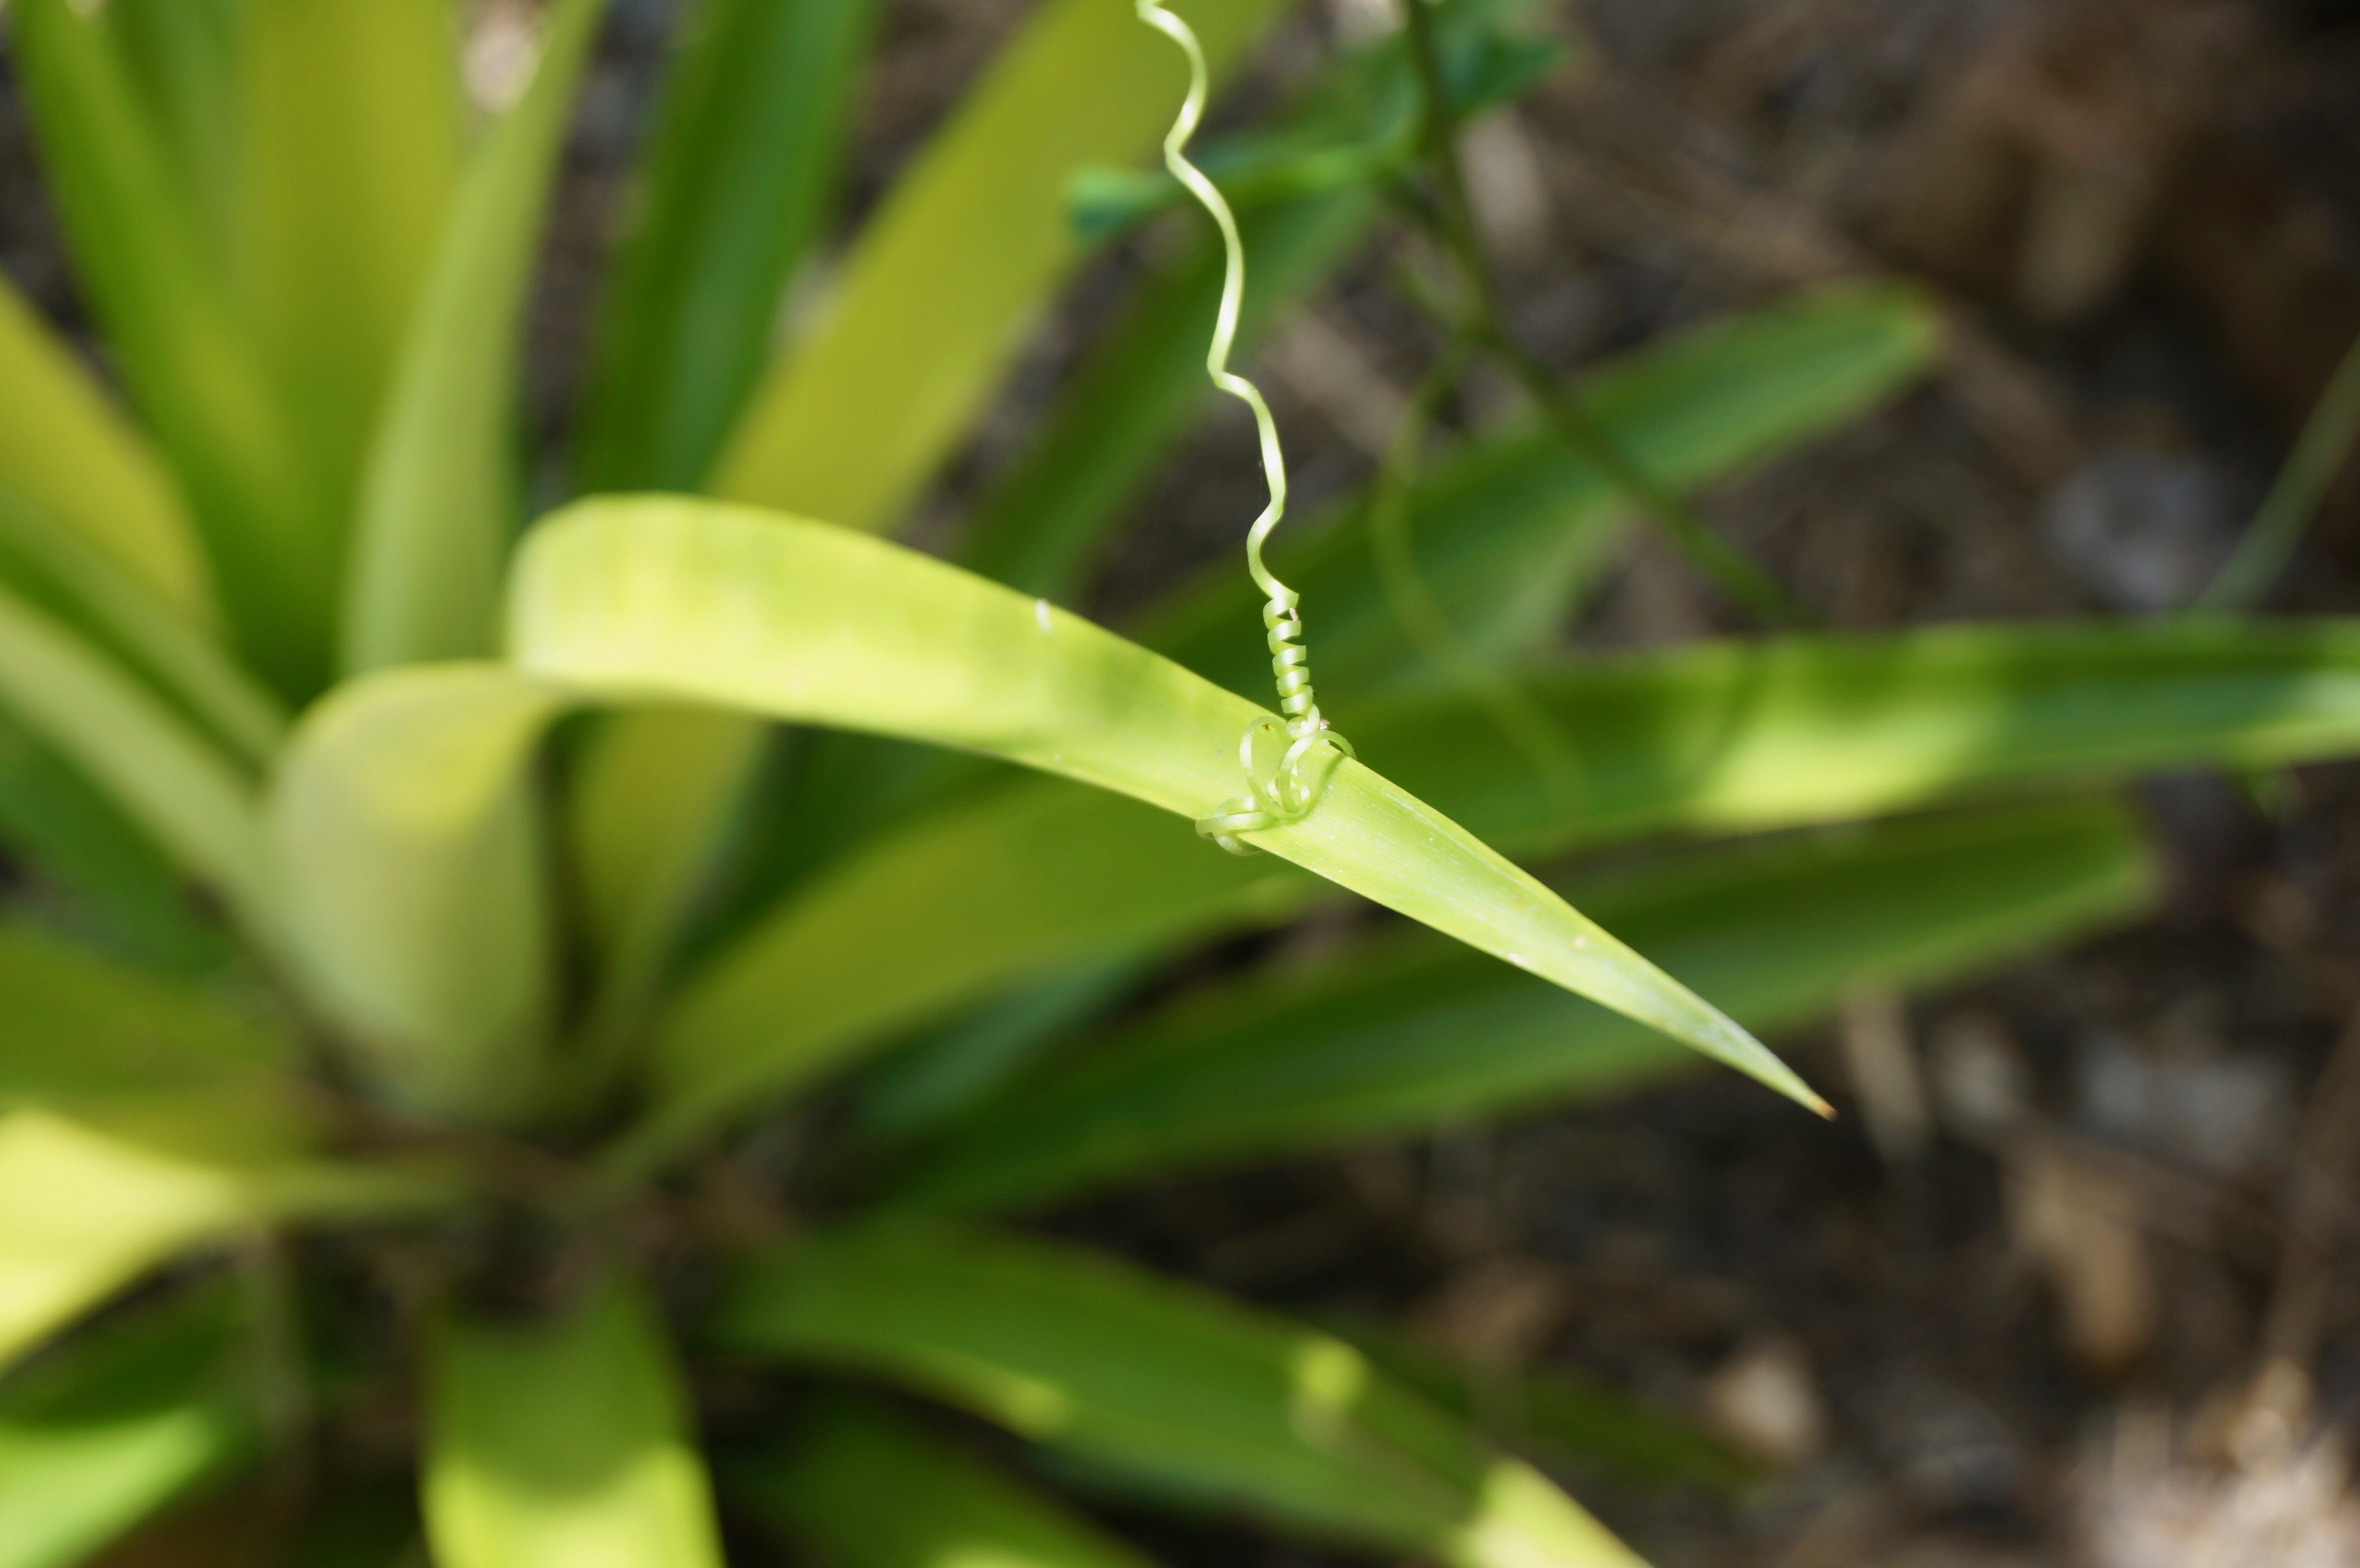 Tindora/ivy gourd tendril curled around pineapple leaf.